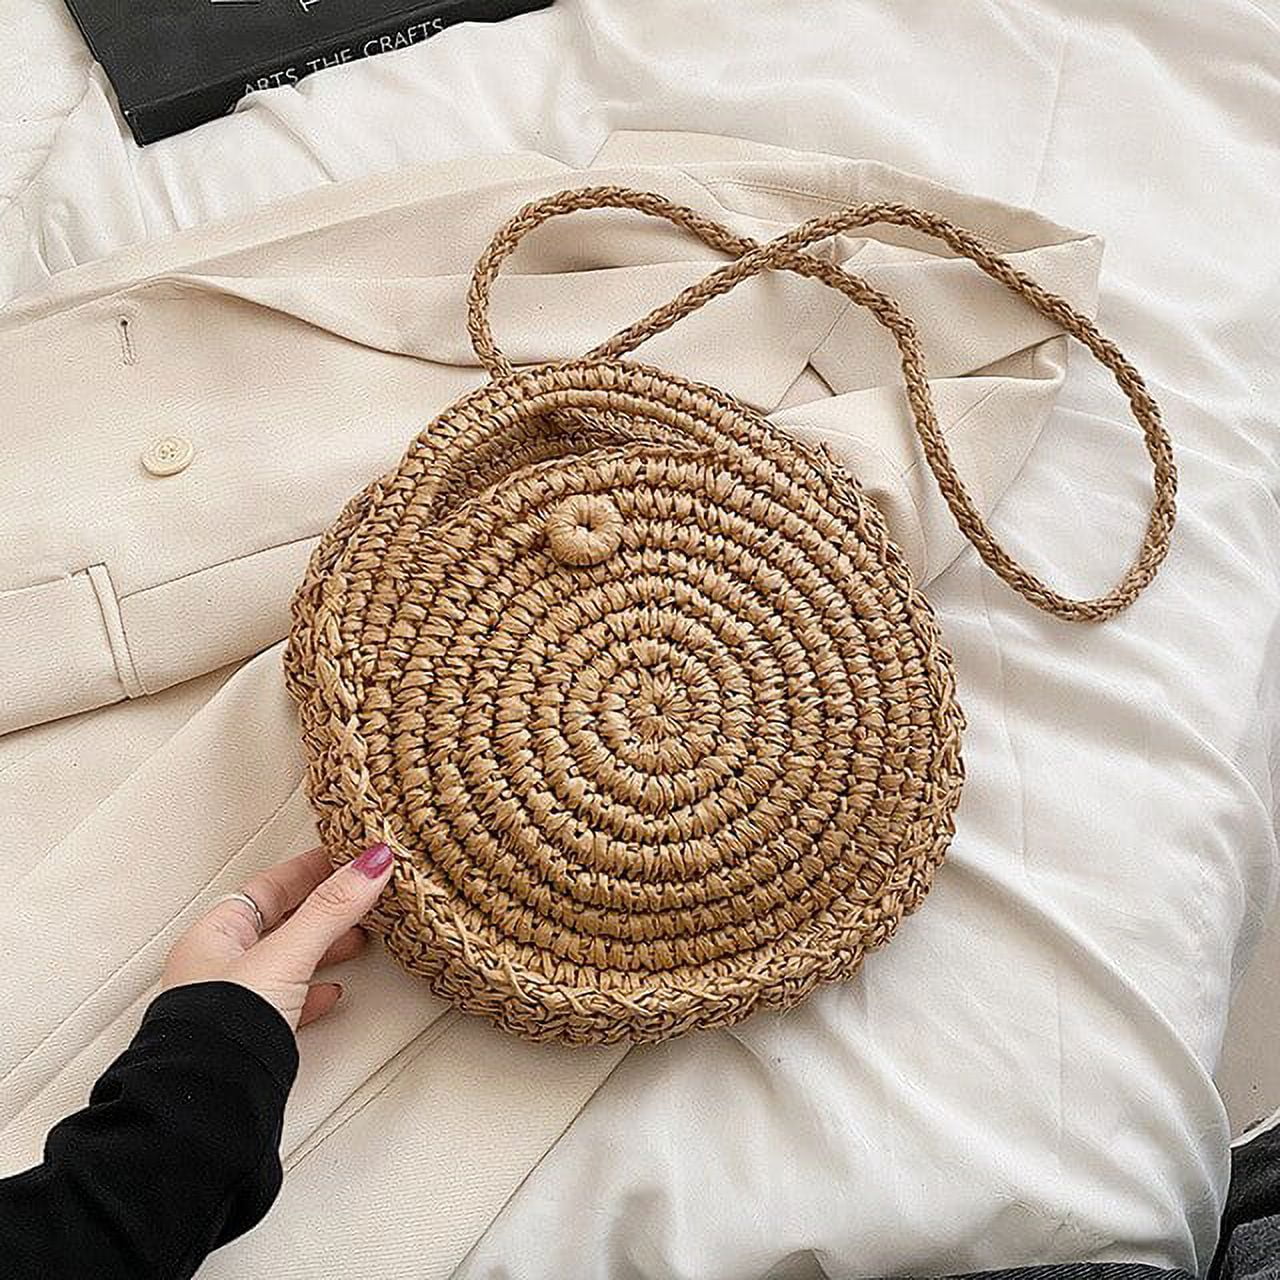 The Round Purse  Circle Shape - Circular Bag with Rivets